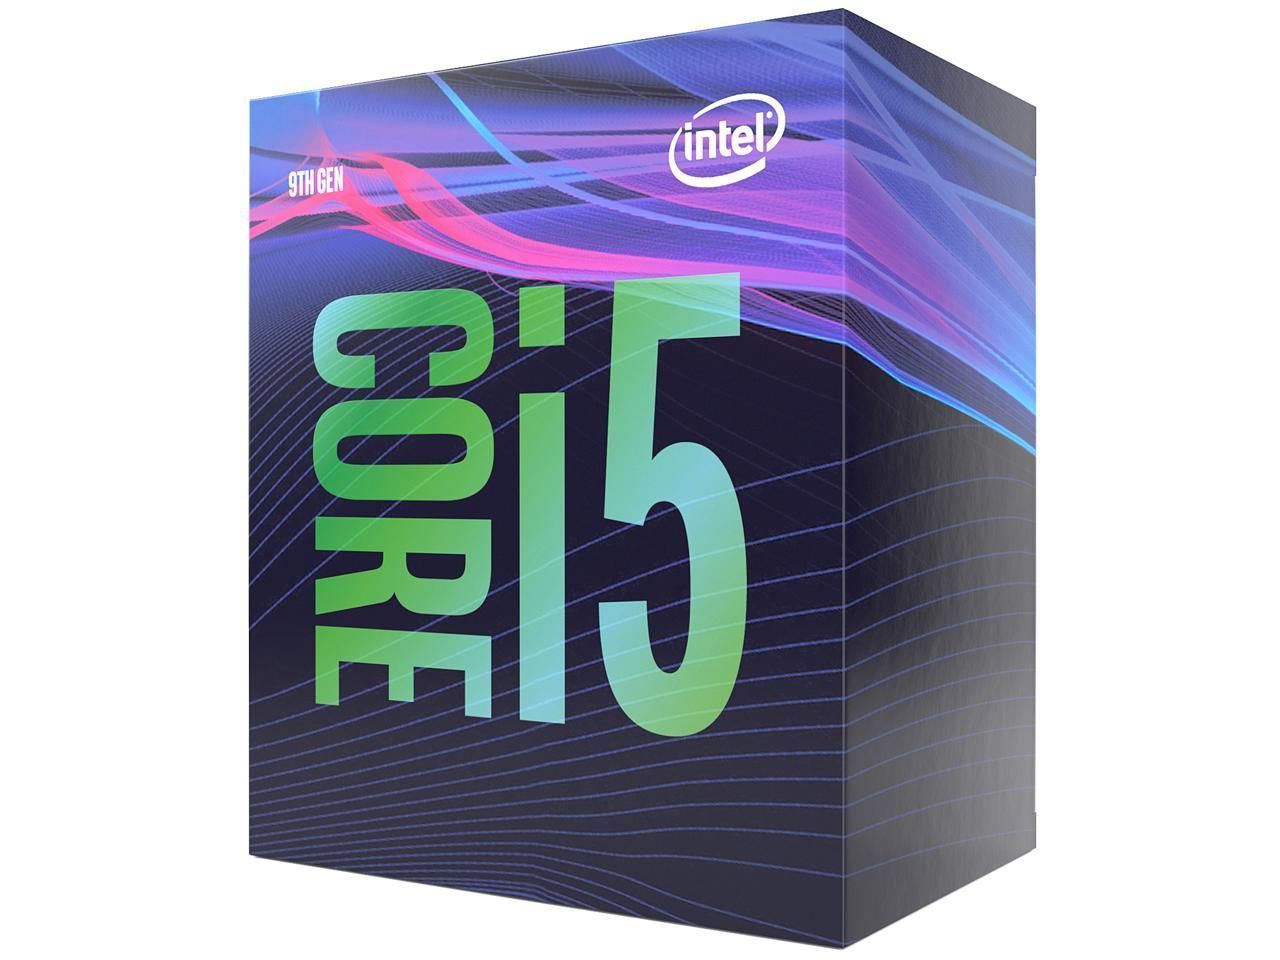 Интел 5 9400. Процессор Intel Core i5-9400. Процессор Intel Core i5-8400 Box. Intel Core i5-9600k. Intel Core i5-9600k (Box).